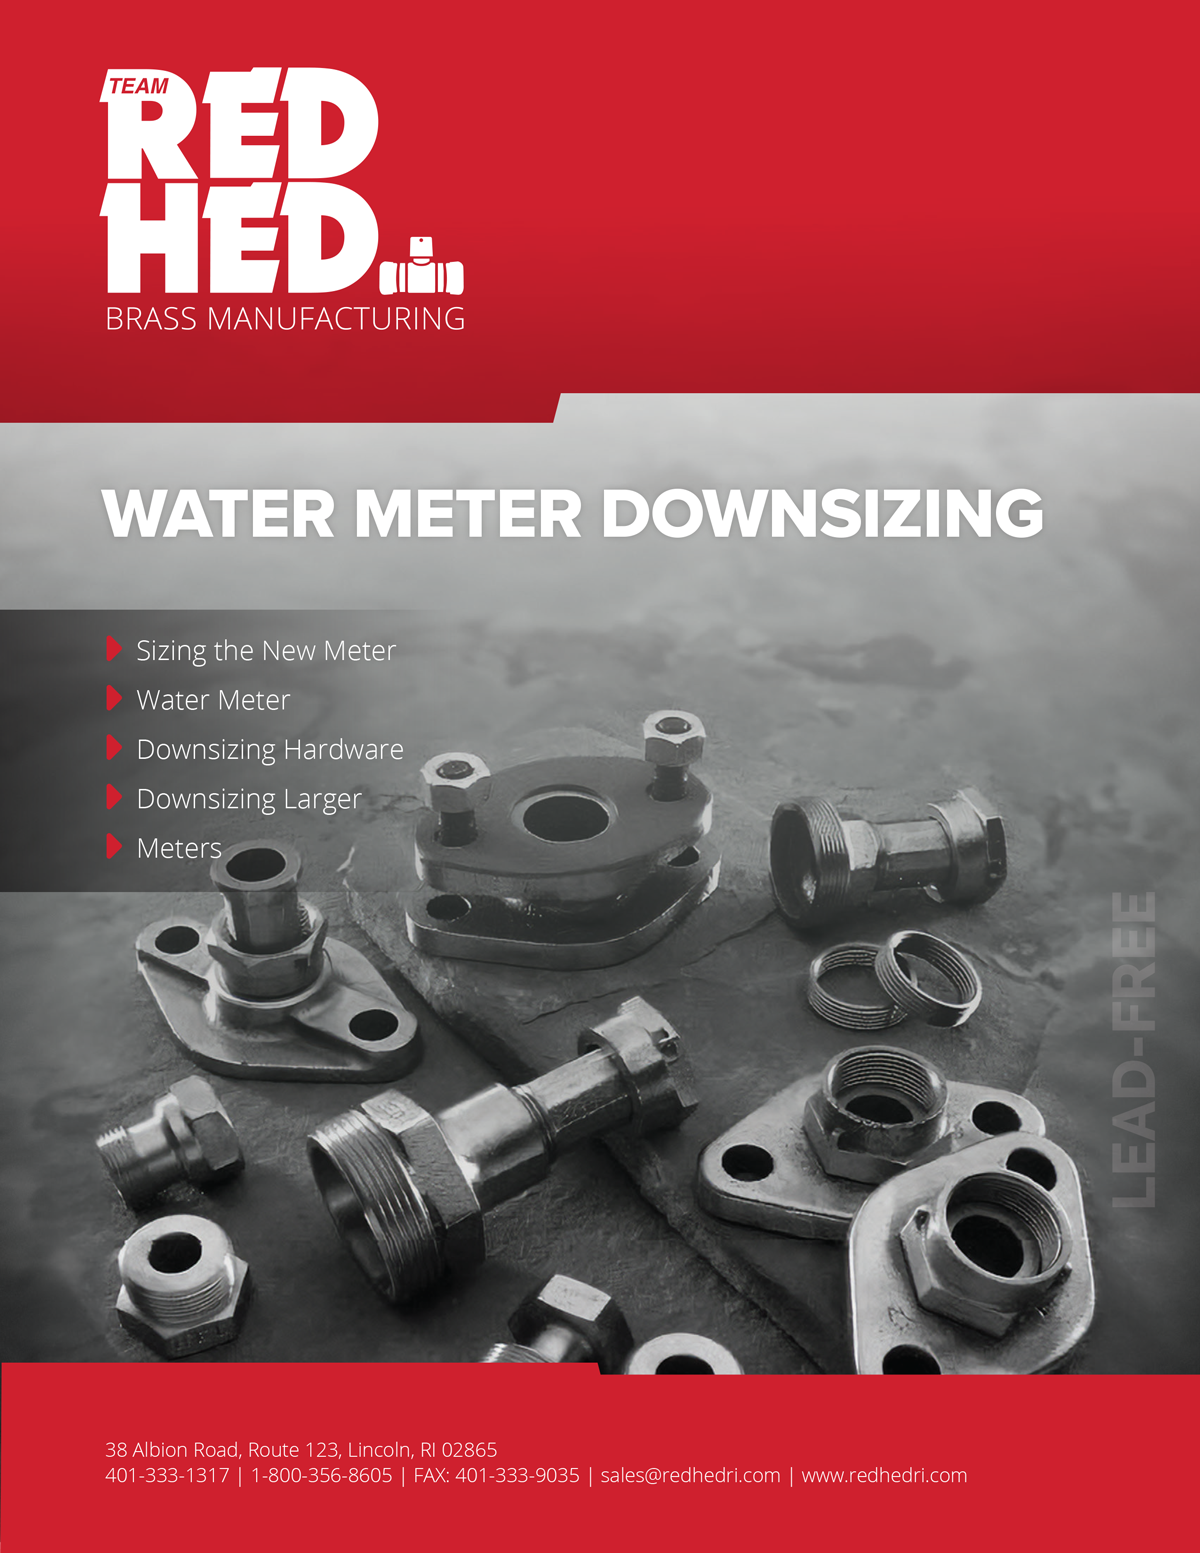 Water Meter Downsizing Guide